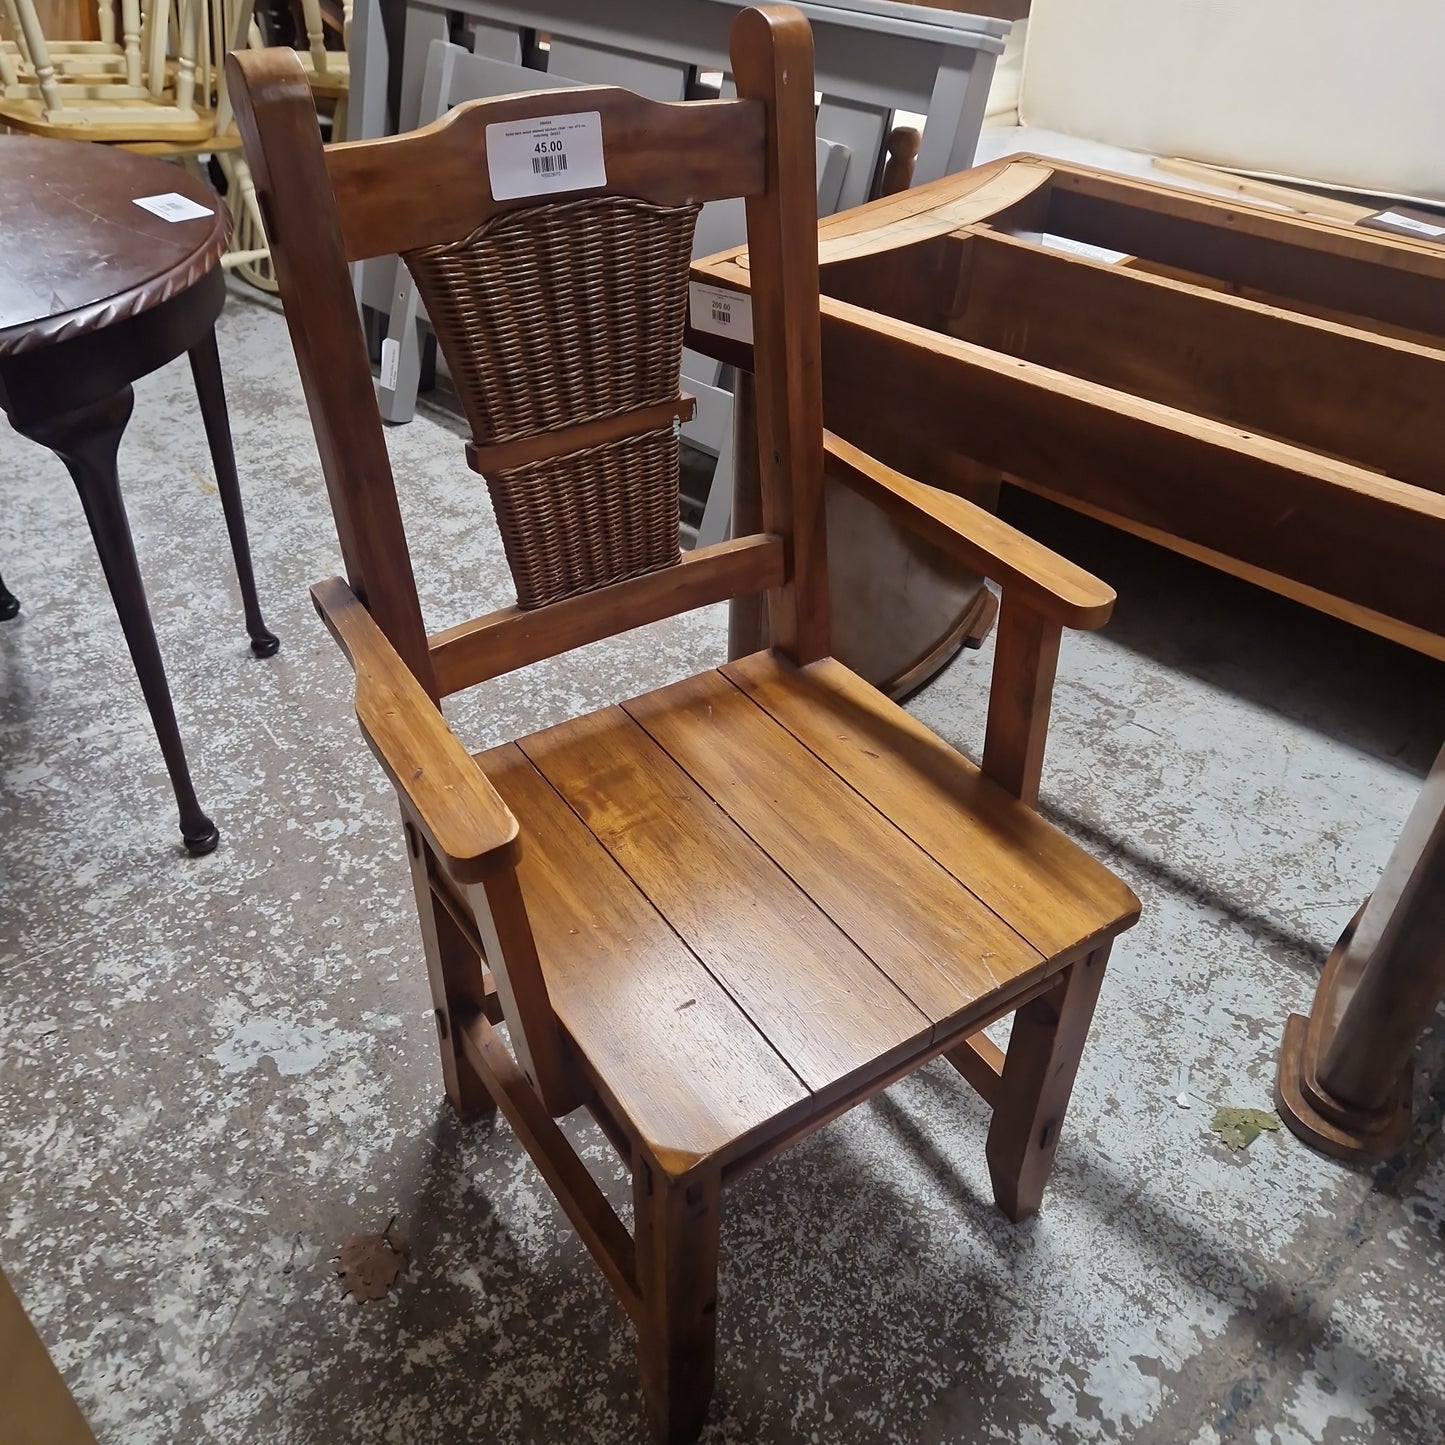 Solid dark wood stained kitchen chair